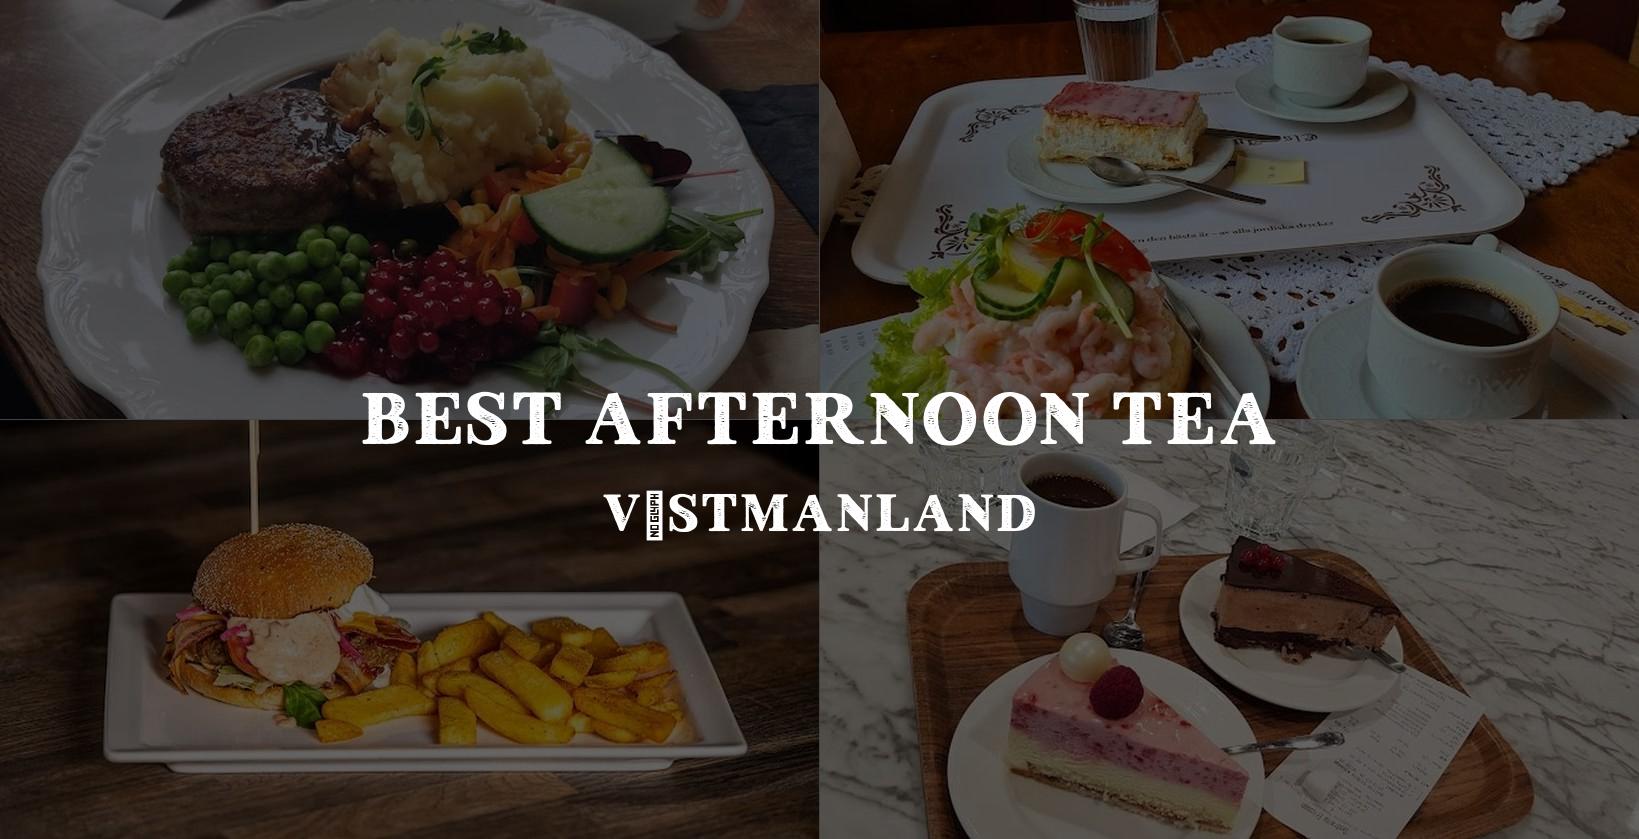 Top Afternoon Tea in Västmanland